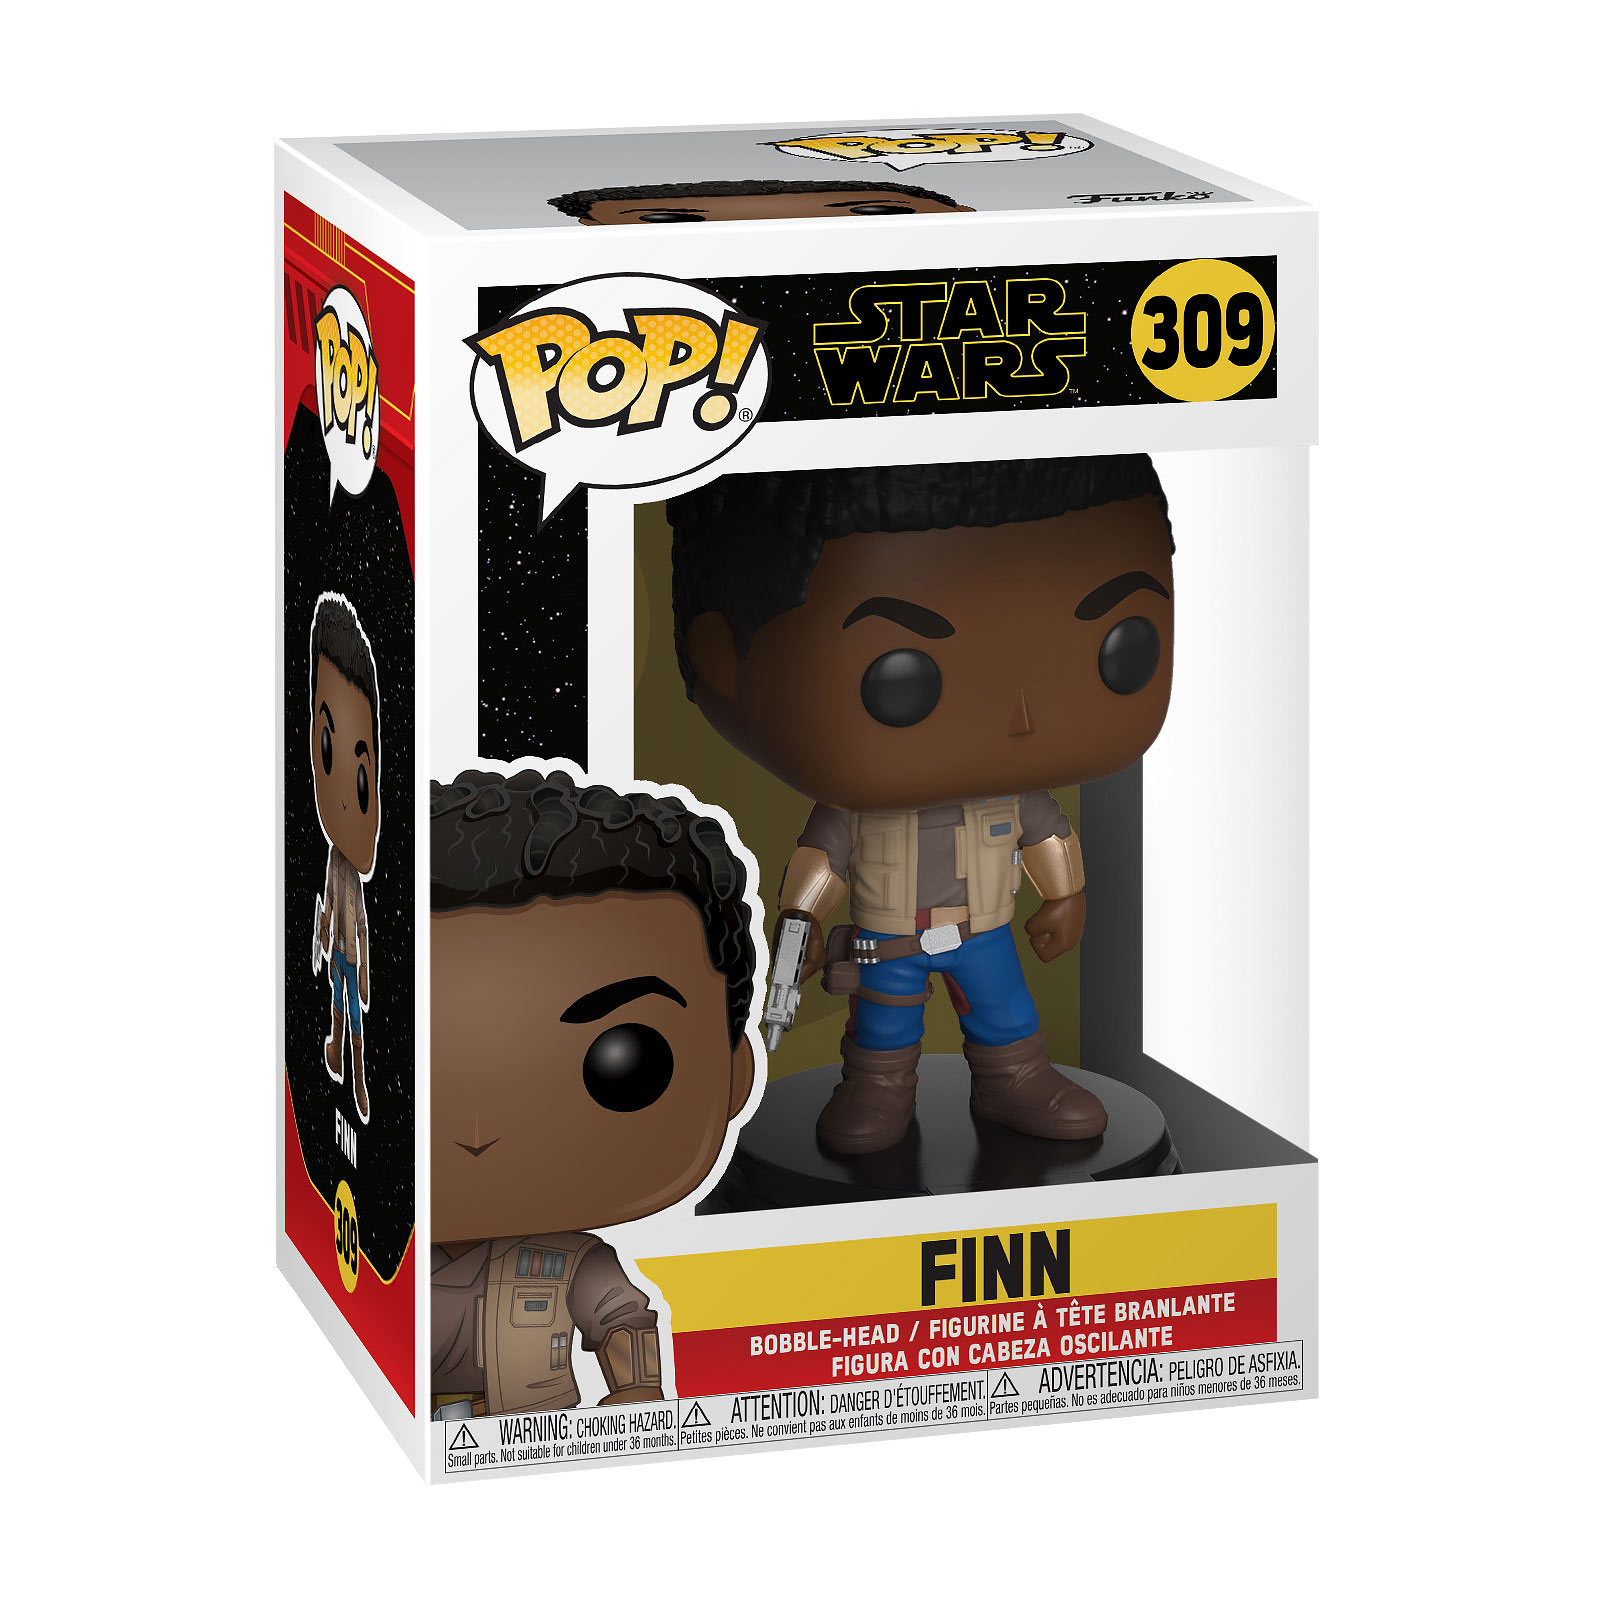 Star Wars - Finn épisode 9 Figurine Funko Pop à tête branlante